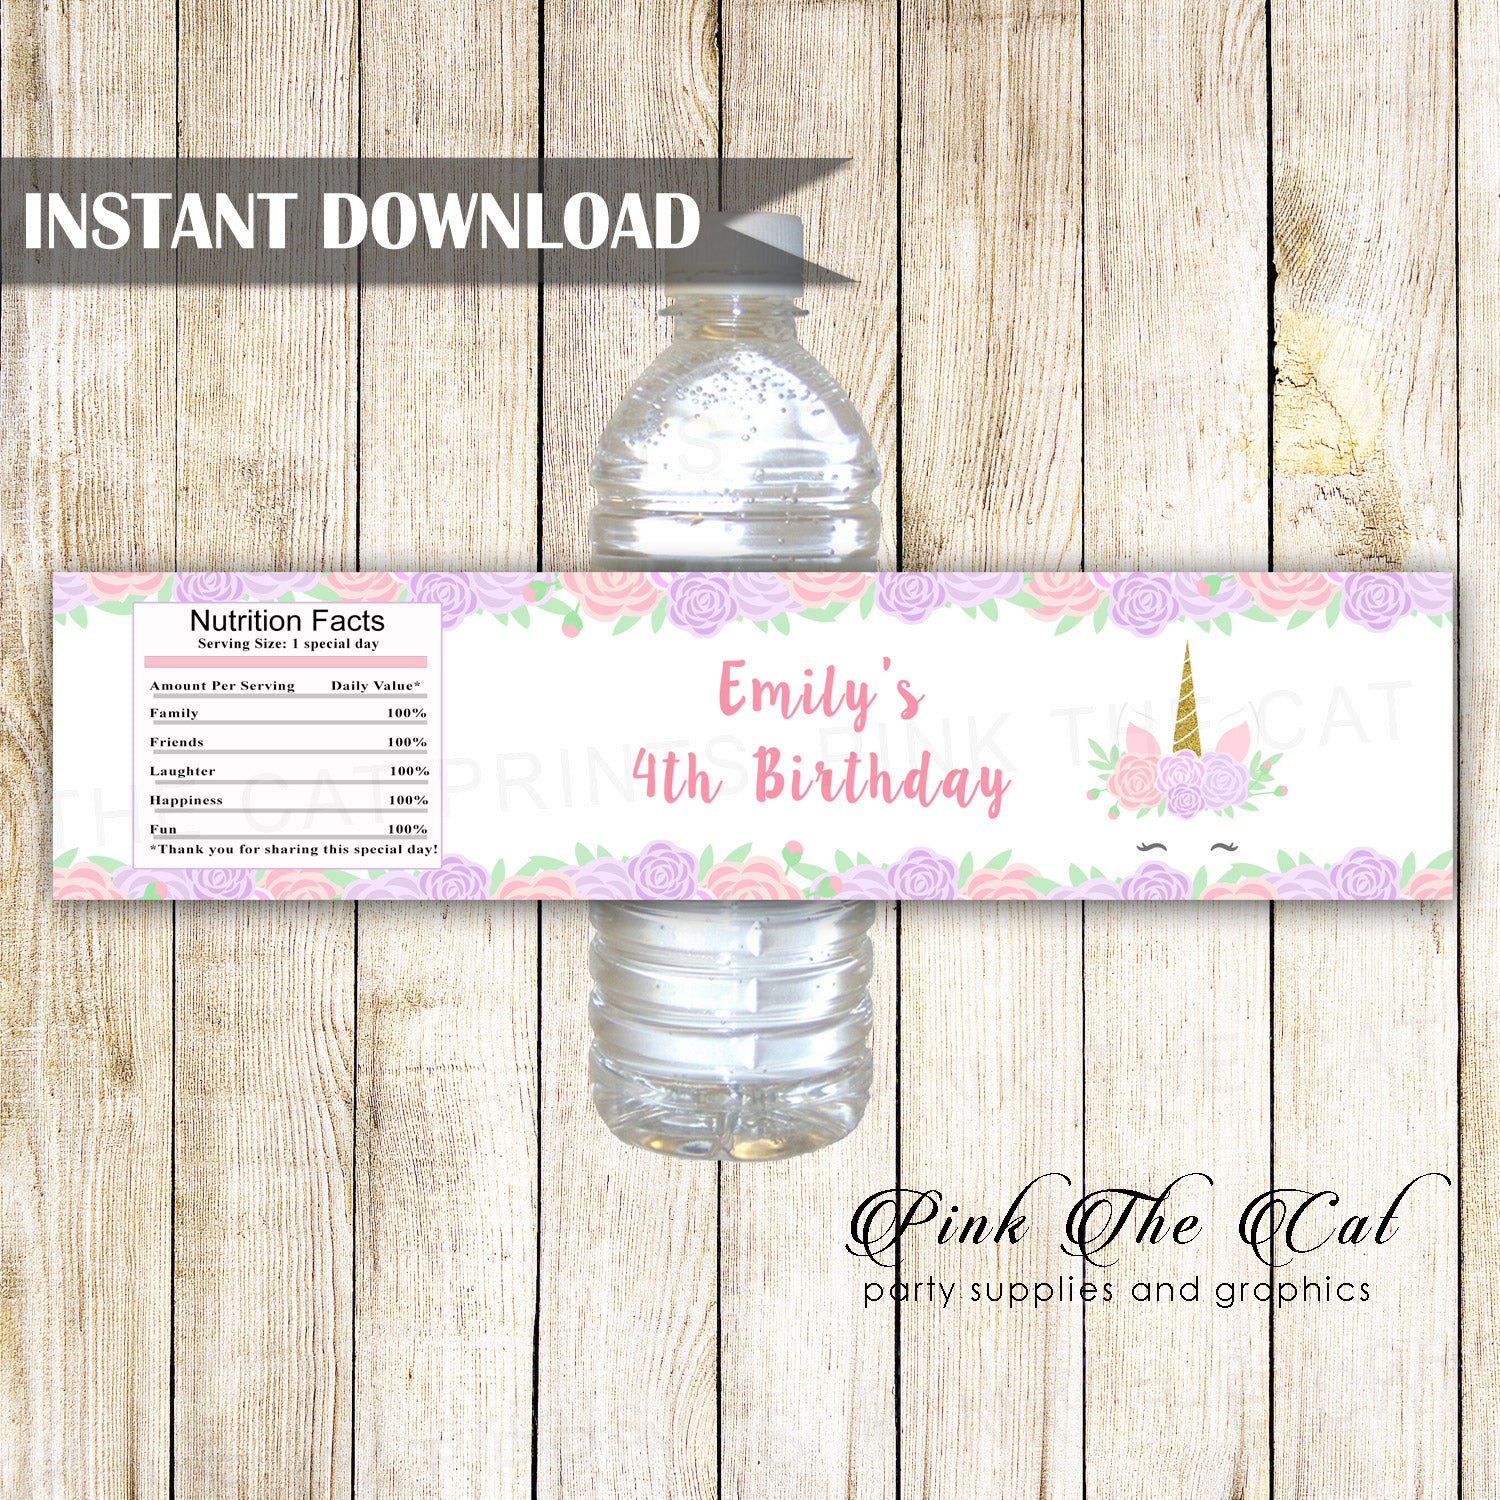 Unicorn floral bottle label instant download